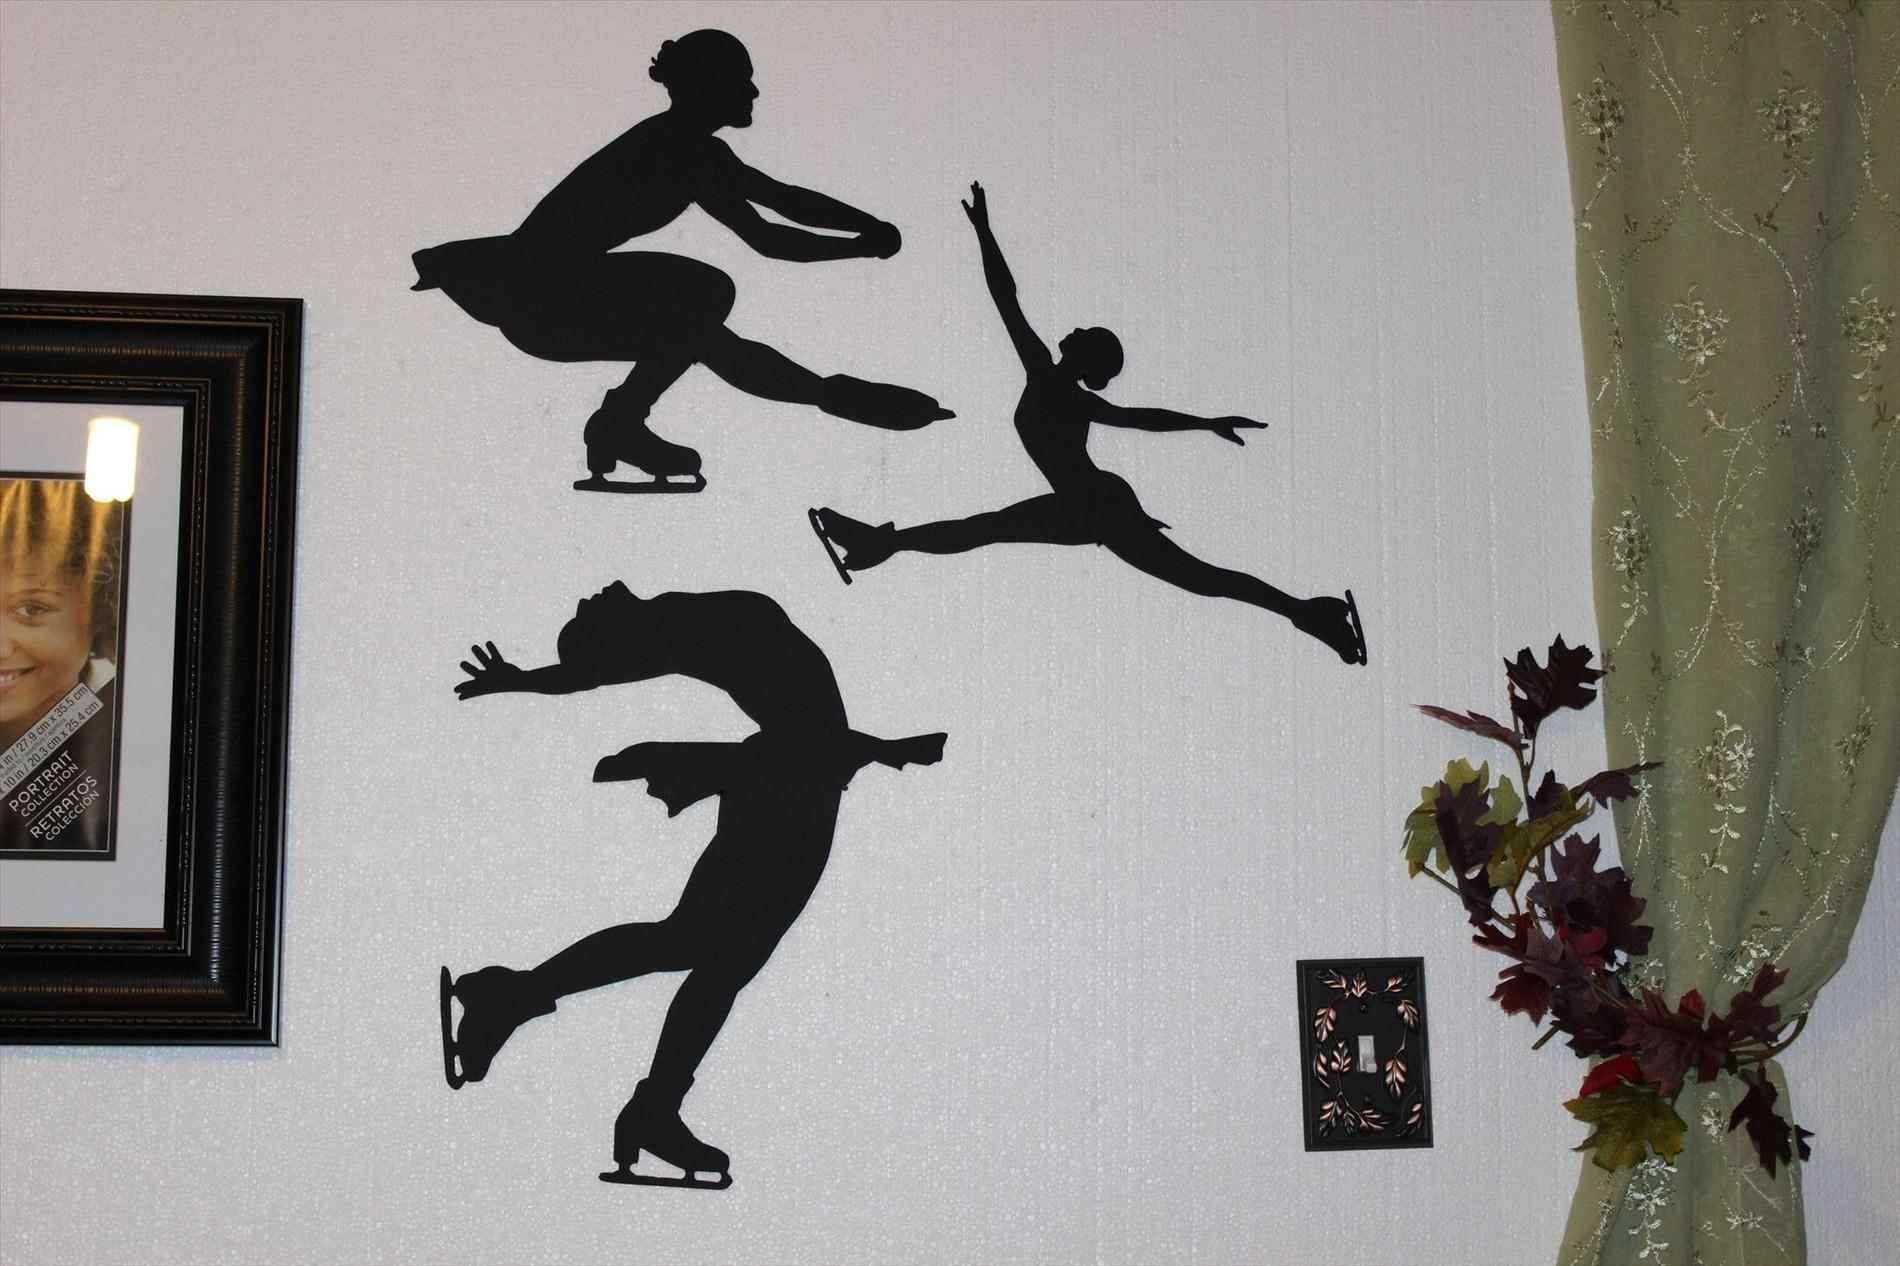 Art Dancers Skater Figure Dancer Set Of Metal Wall Art Ideas In Best And Newest Metal Wall Art Dancers (View 8 of 20)